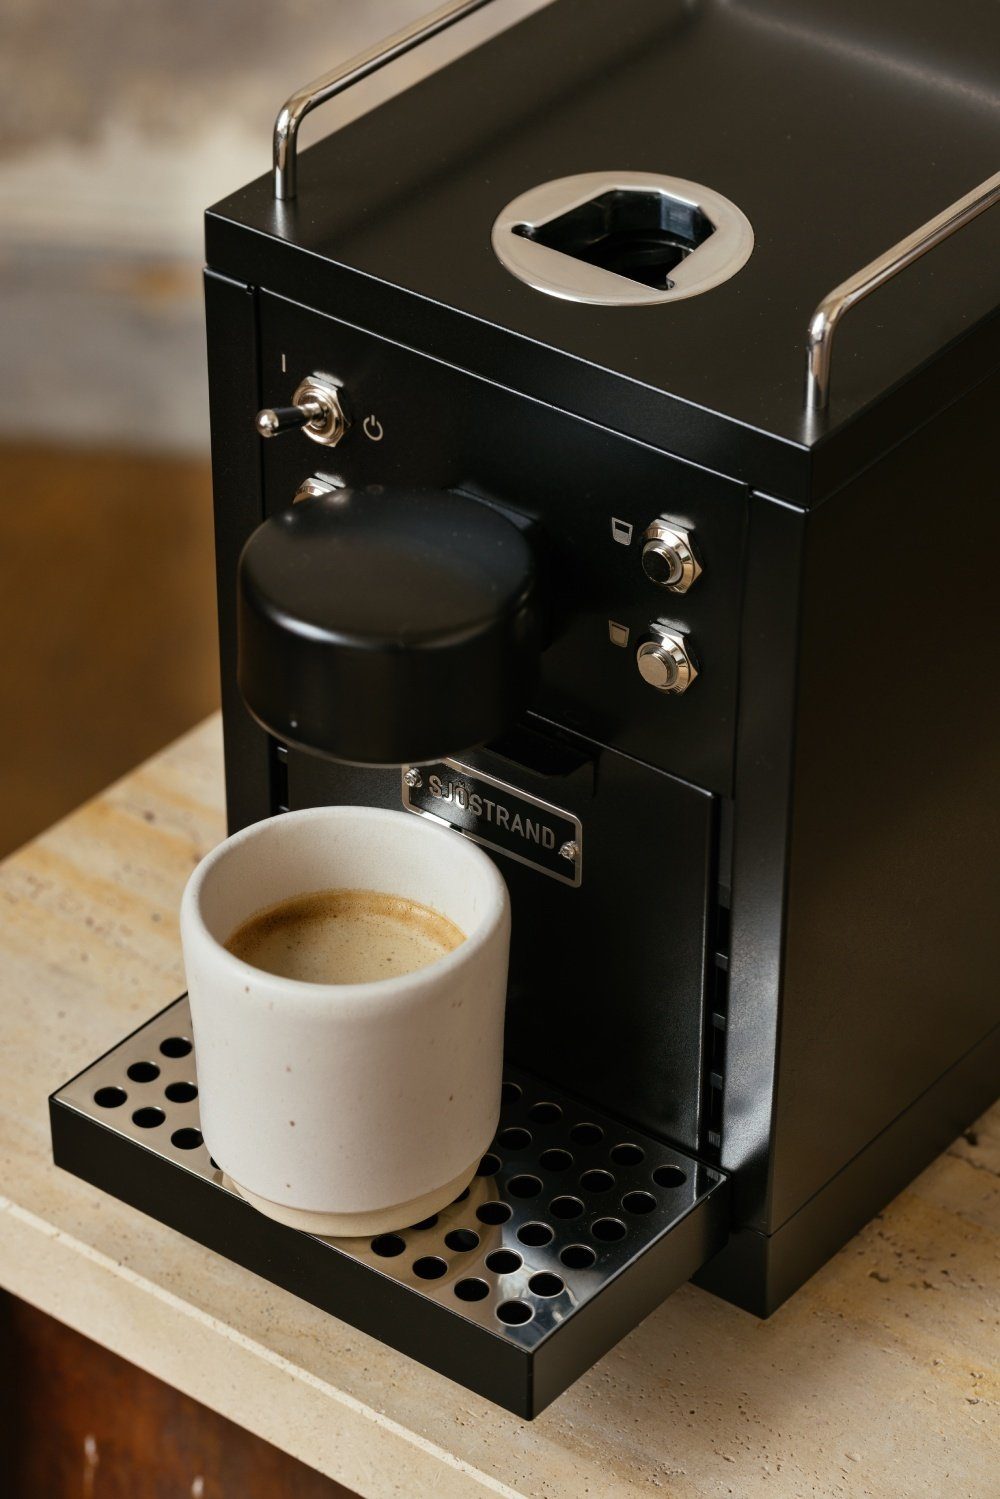 Kapselmaschine Machine Black Sjöstrand Espresso Capsule